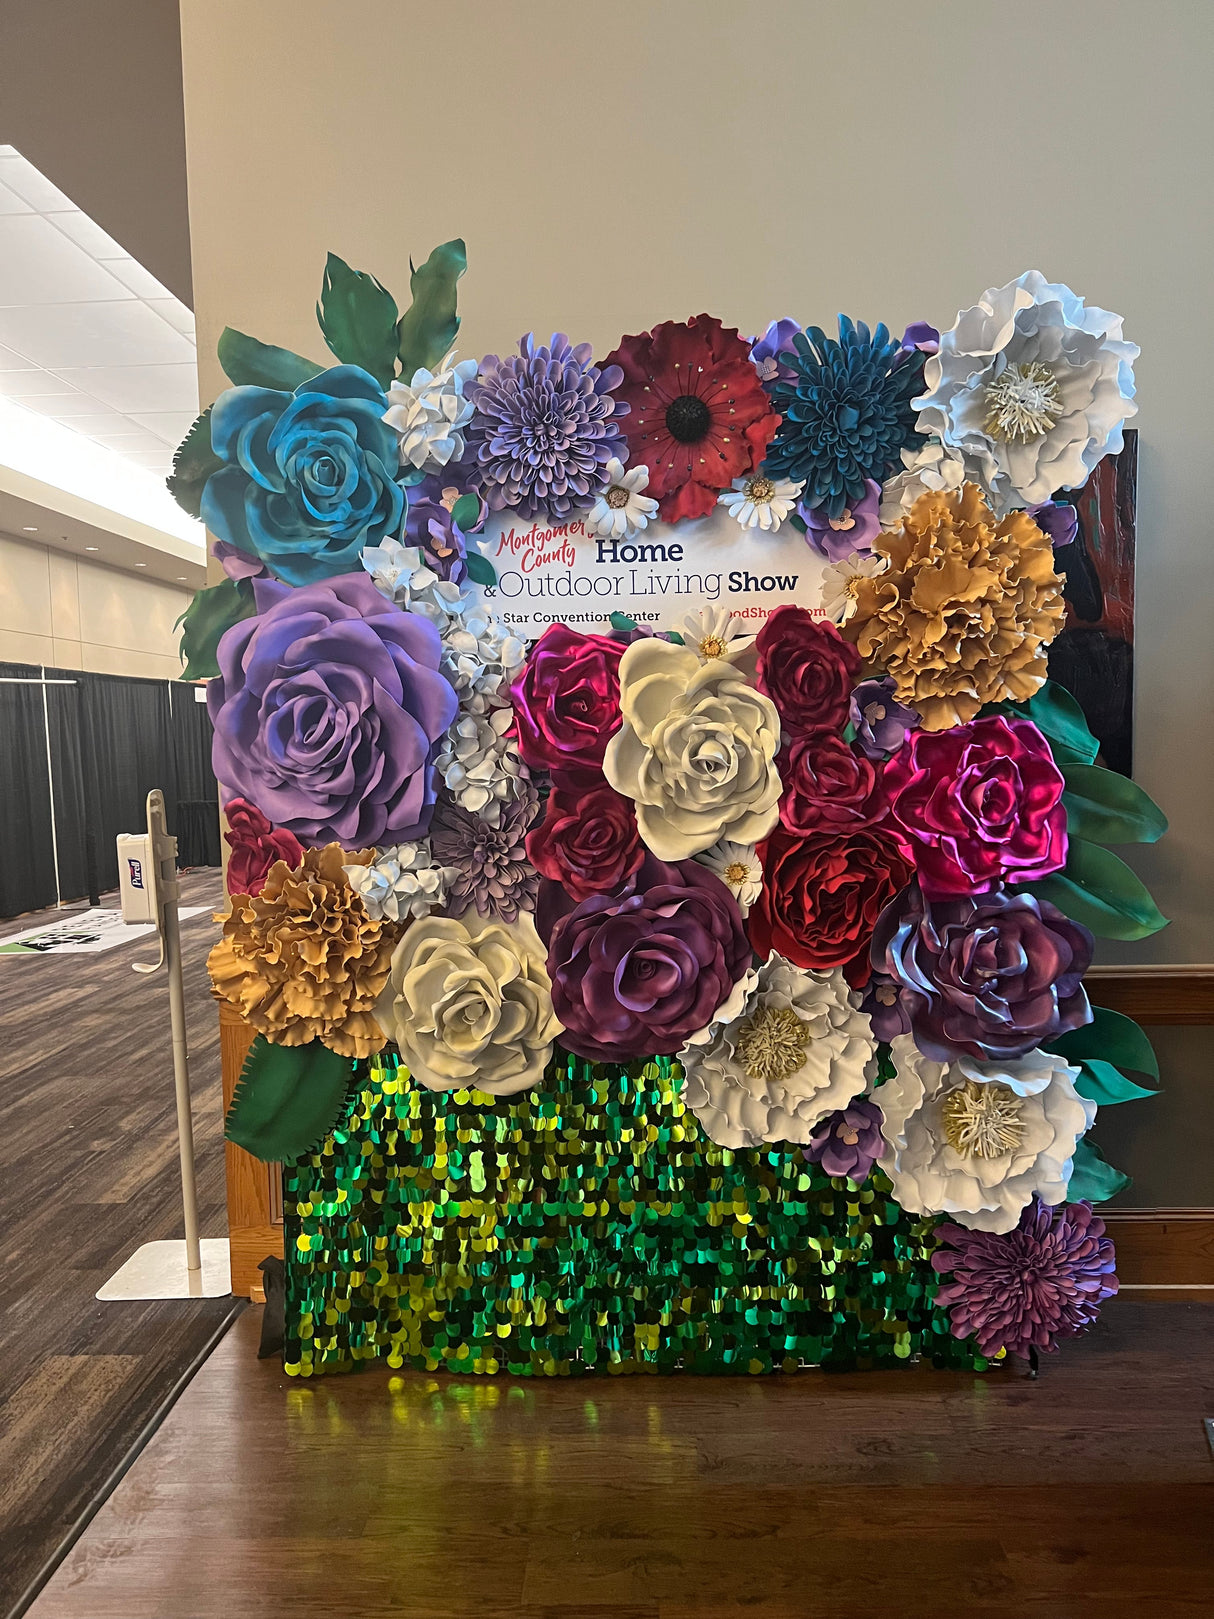 Custom Foam Wall Rose - Handcrafted Decorative Flower